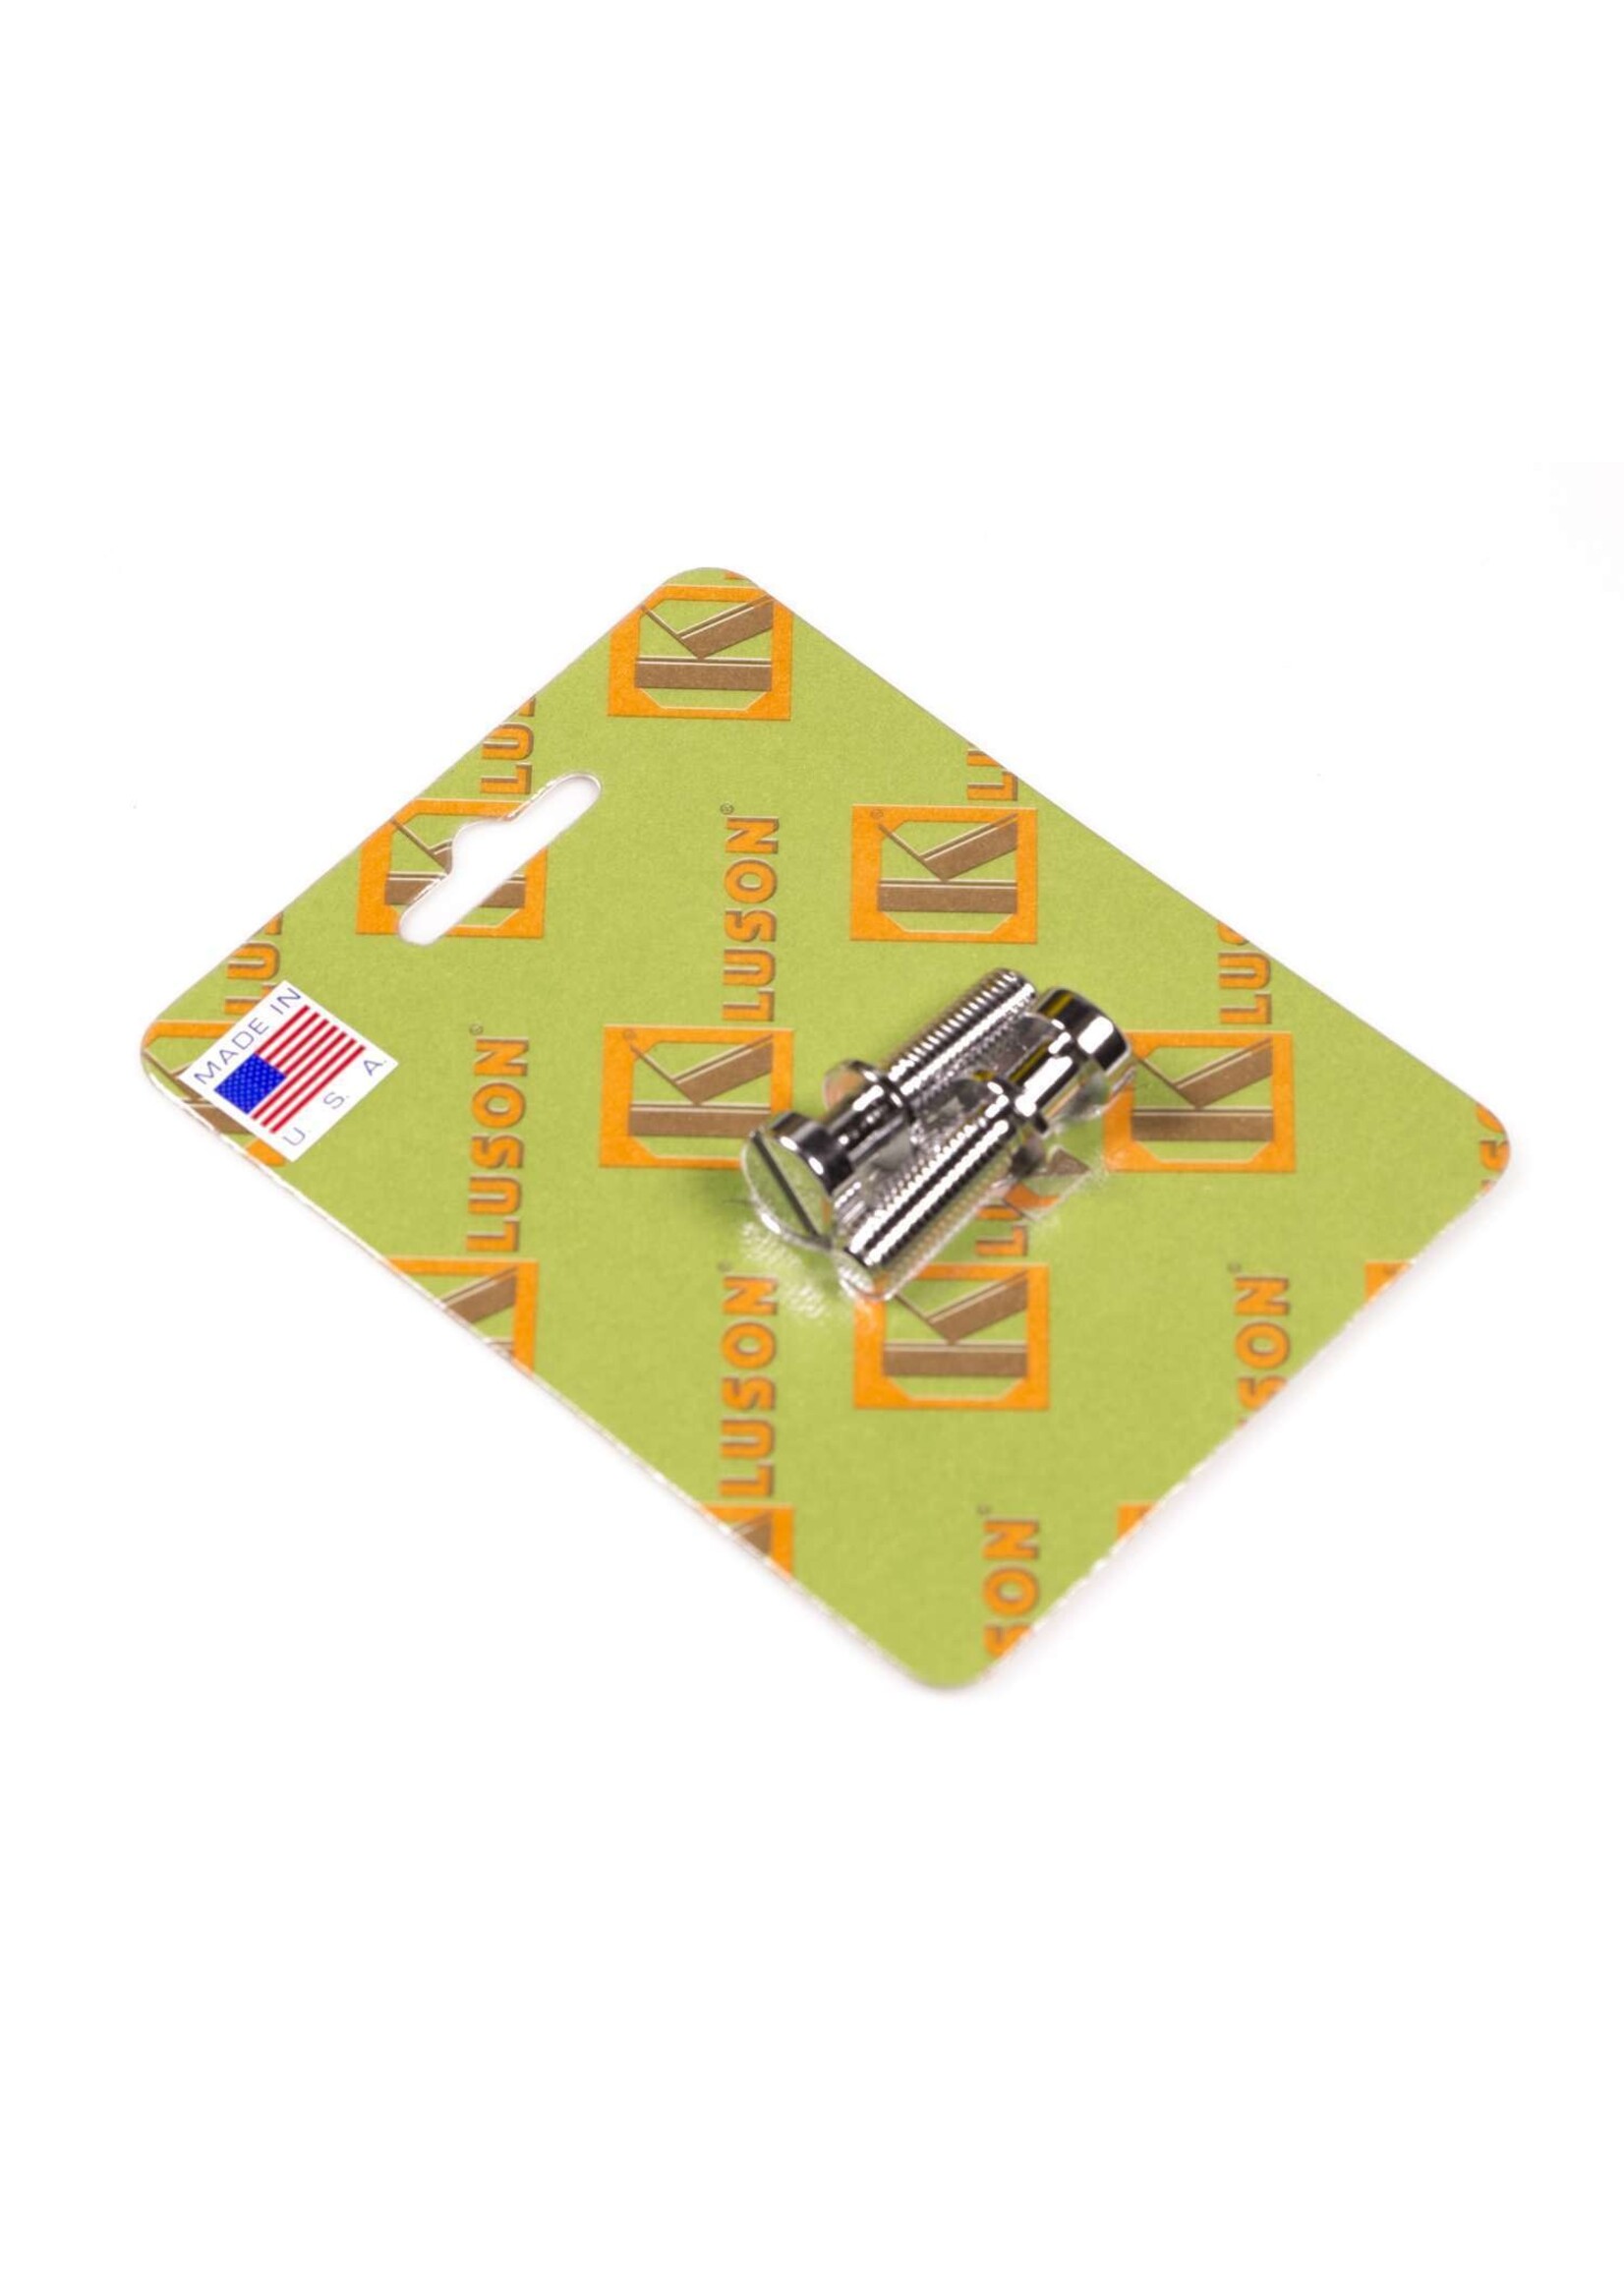 Kluson USA Brass Stop Tailpiece Stud Set USA Thread Chrome + $5 SHIPPING